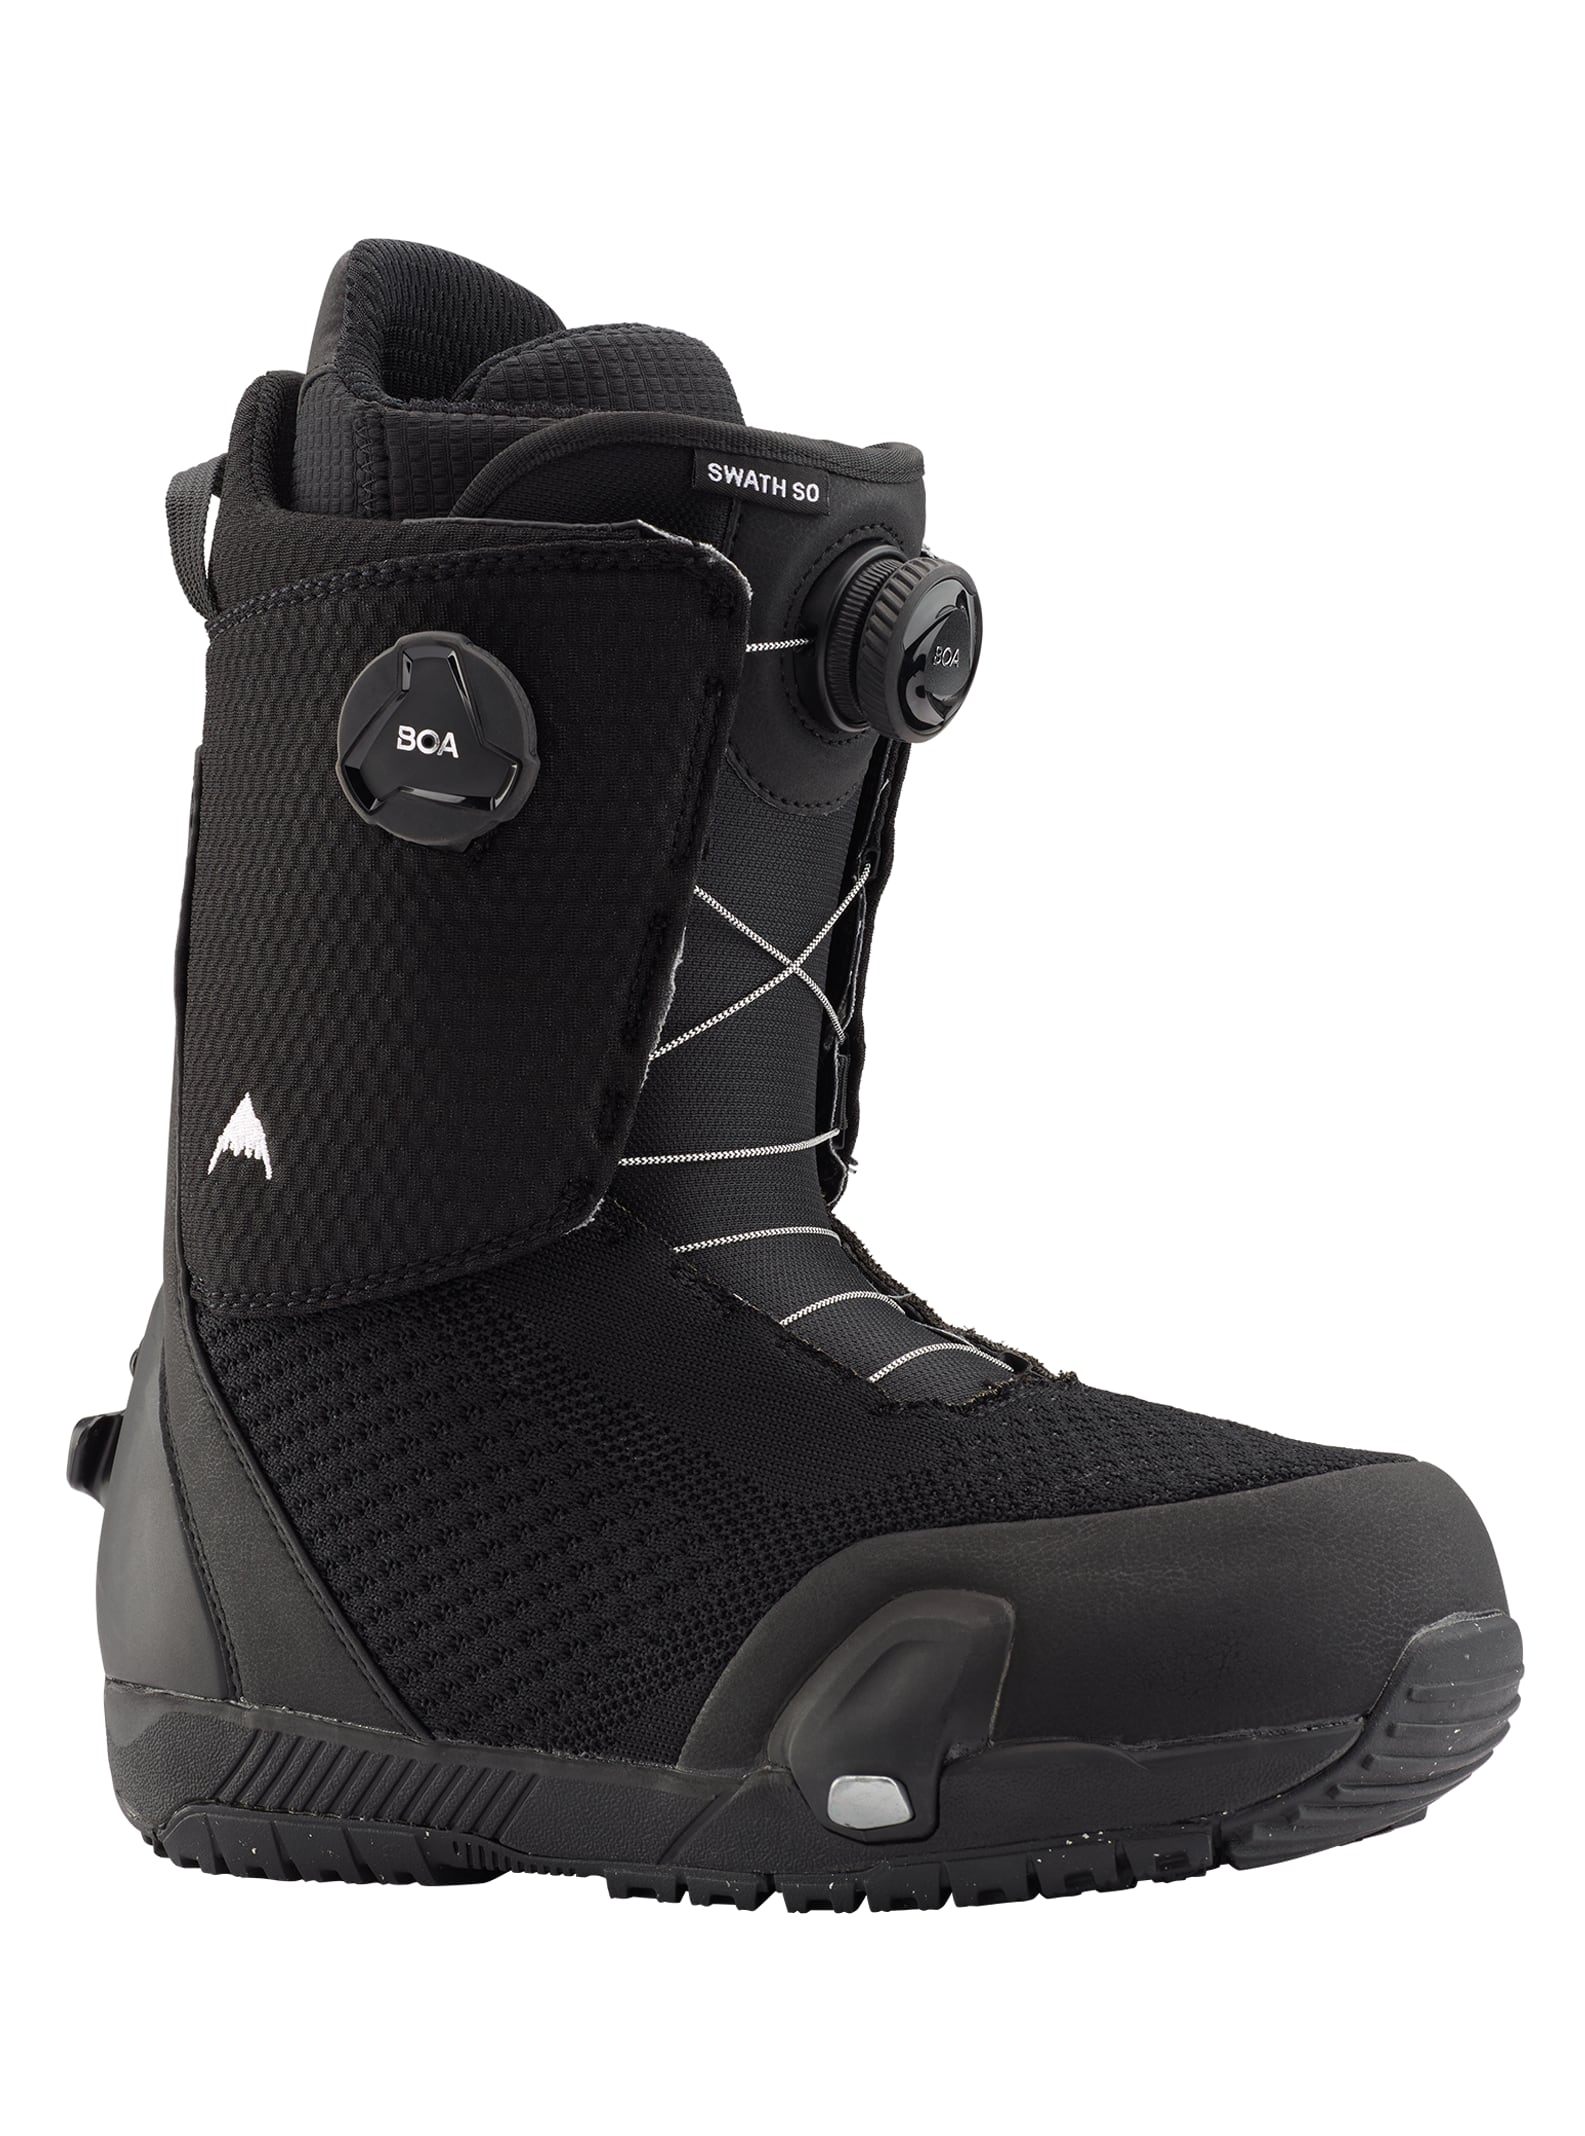 Burton - Boots de snowboard Swath Step On® homme, Black, 105